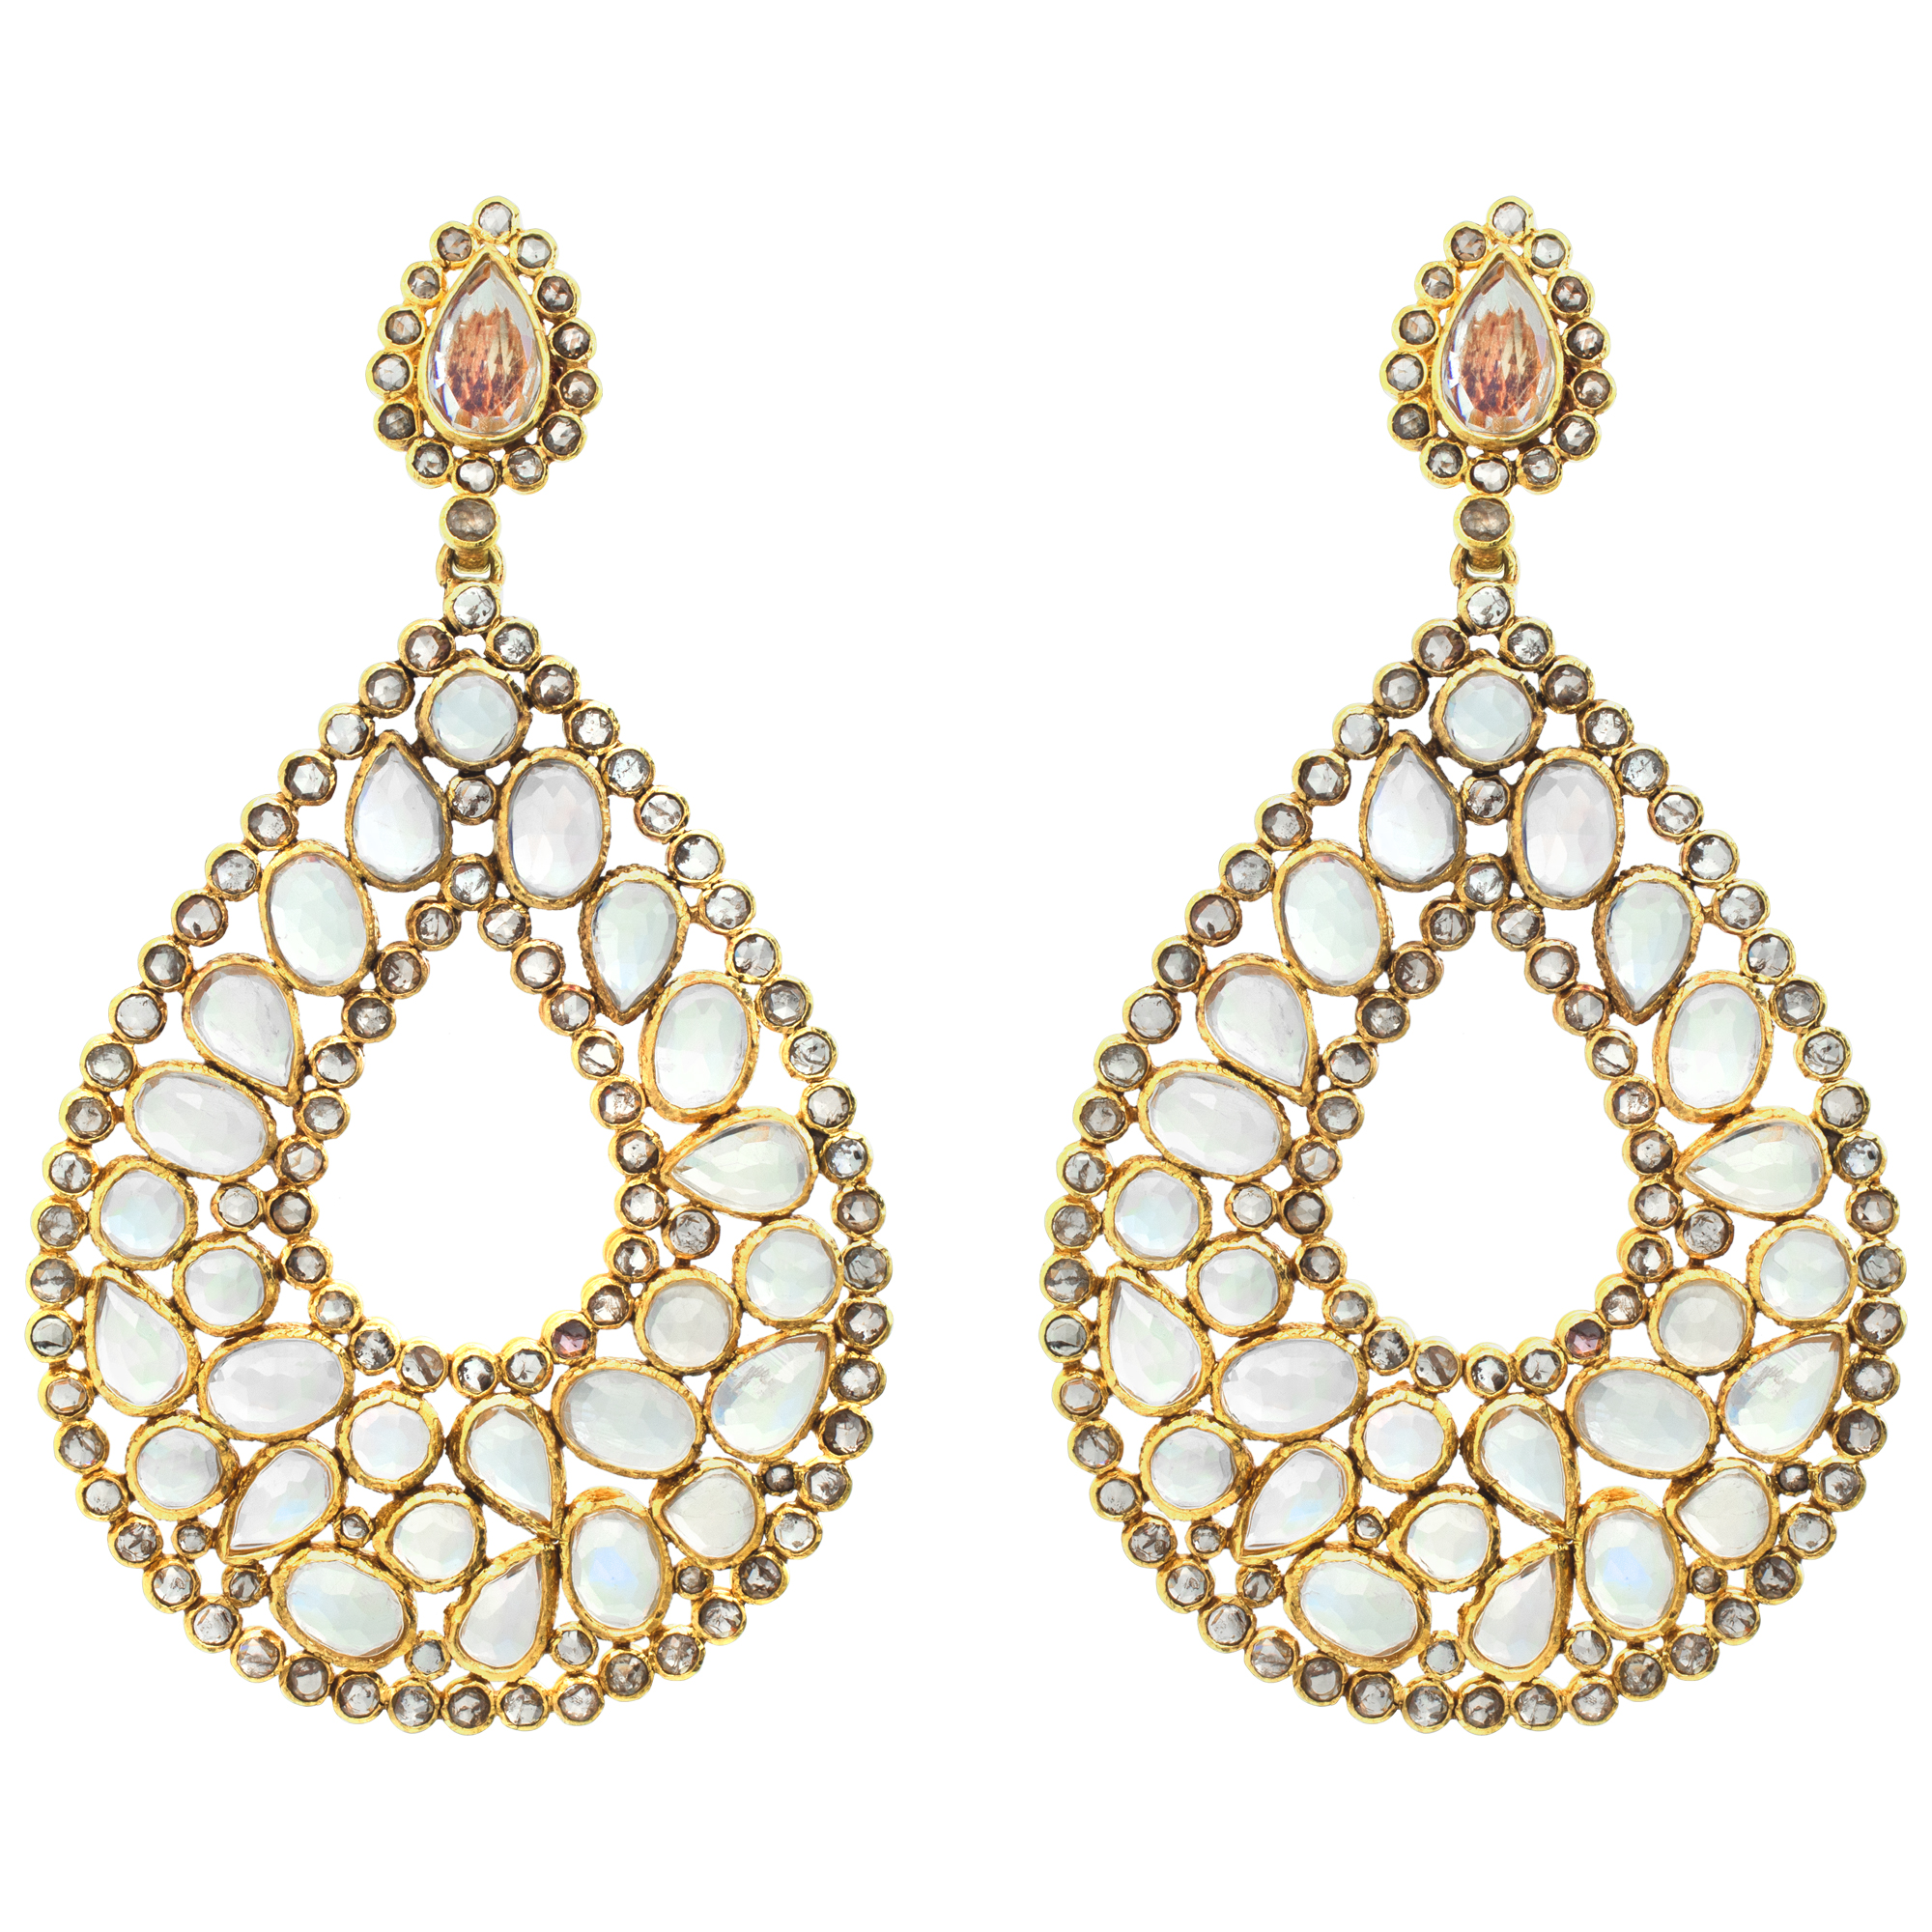 Moonstone and diamond drop earrings in 18k yellow gold